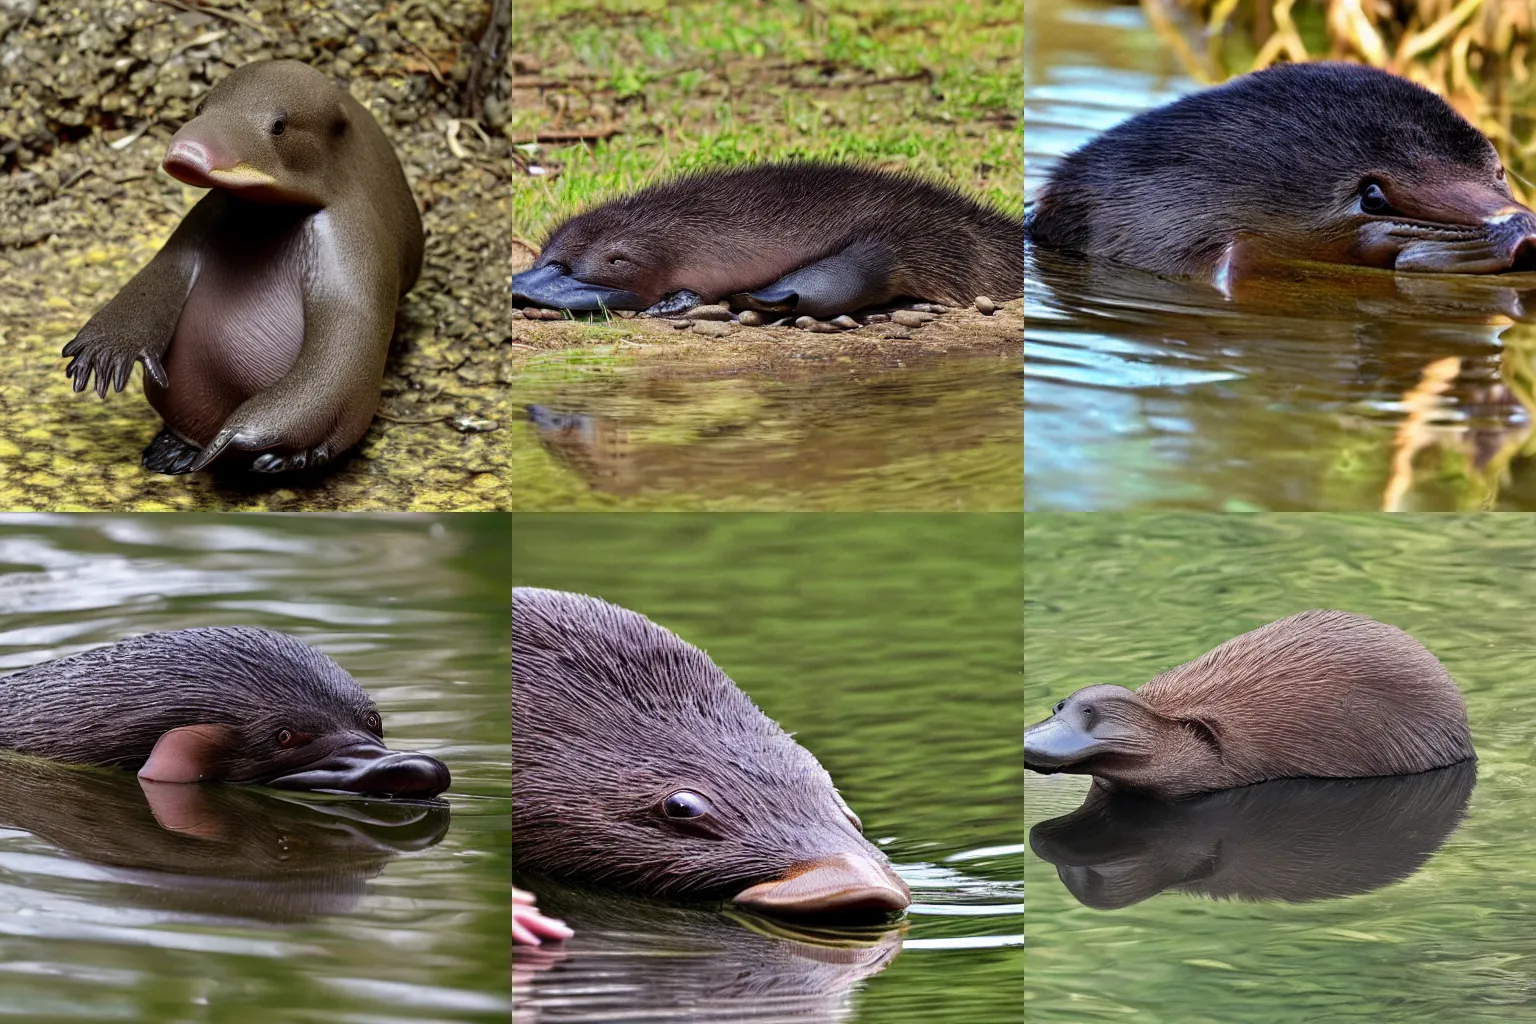 Prompt: A platypus